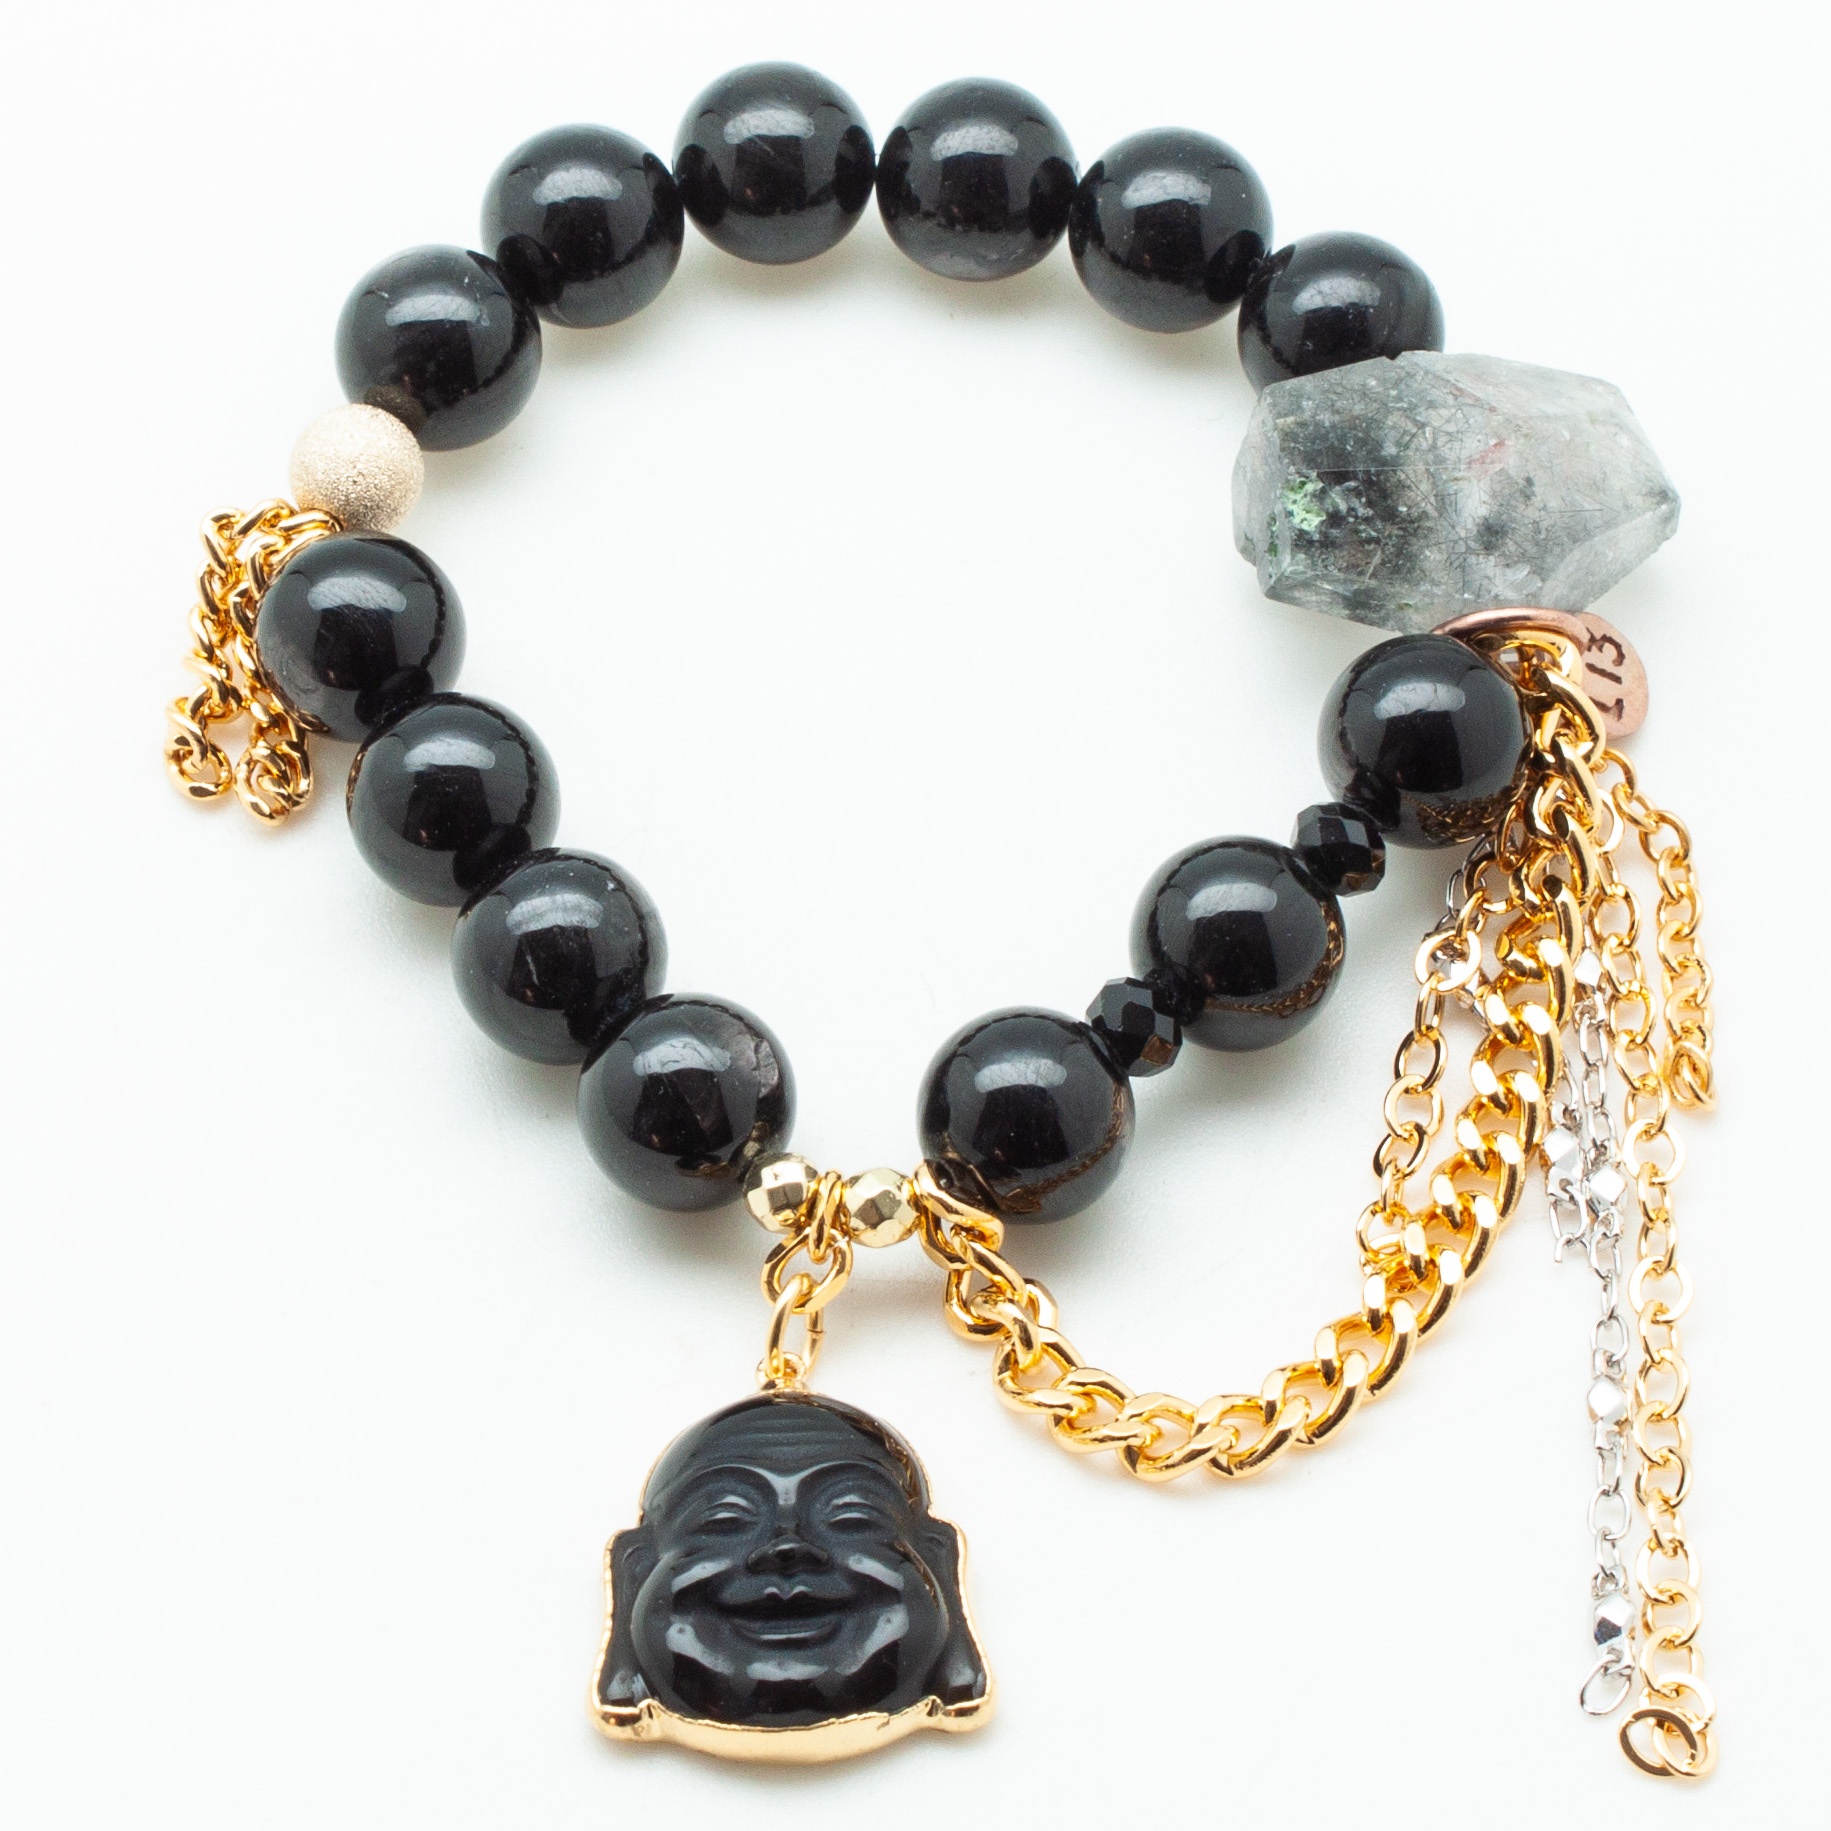 Hypersthene with an Obsidian Prosperity Buddha